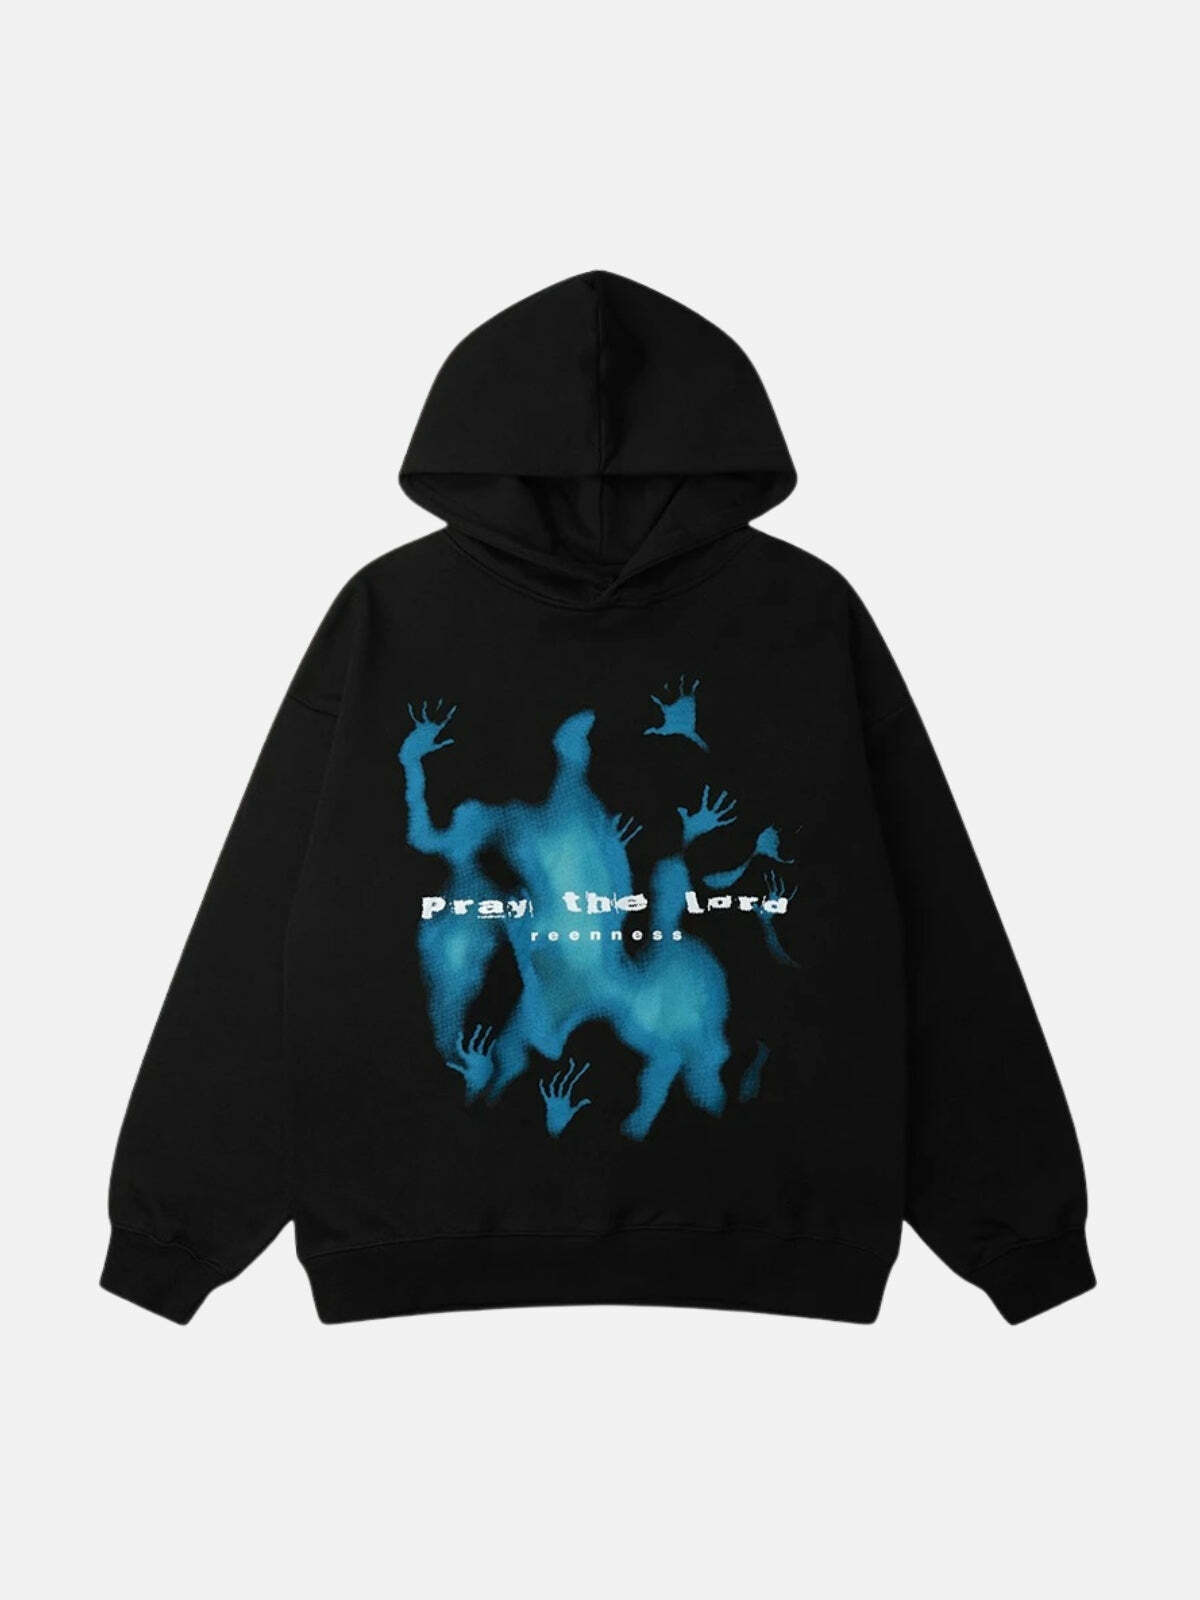 shadow print hoodie edgy & abstract streetwear 7961